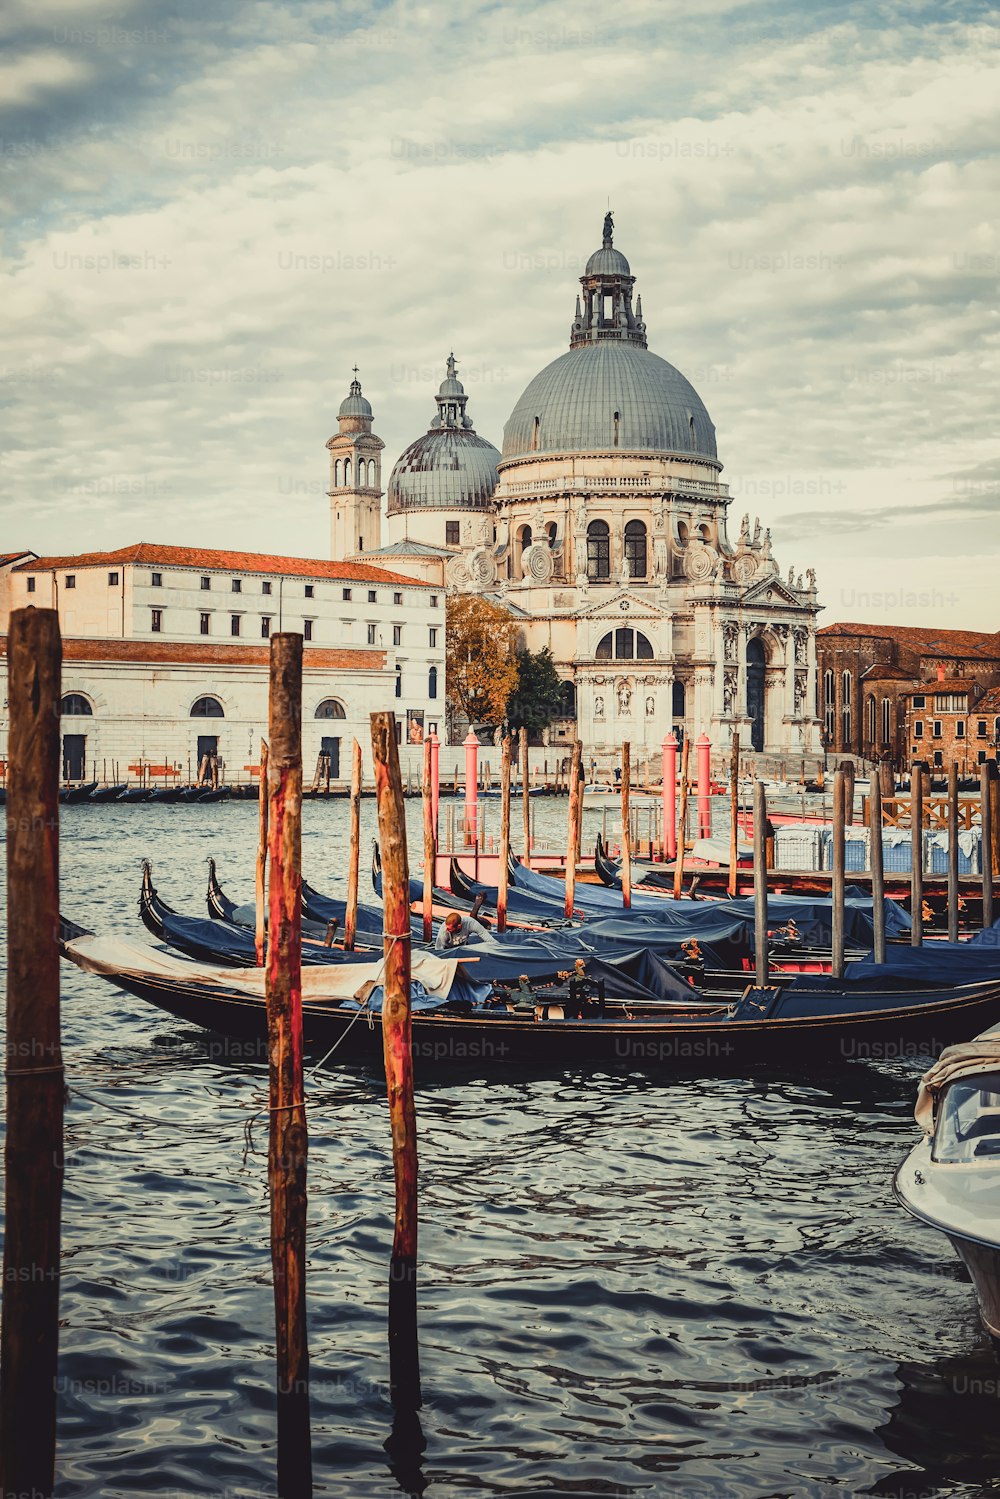 Gondola boats in Venice Italy with gorgeous view of Basilica Santa Maria della Salute. Venice is famous travel destination in Italy for its unique cityscape and culture.